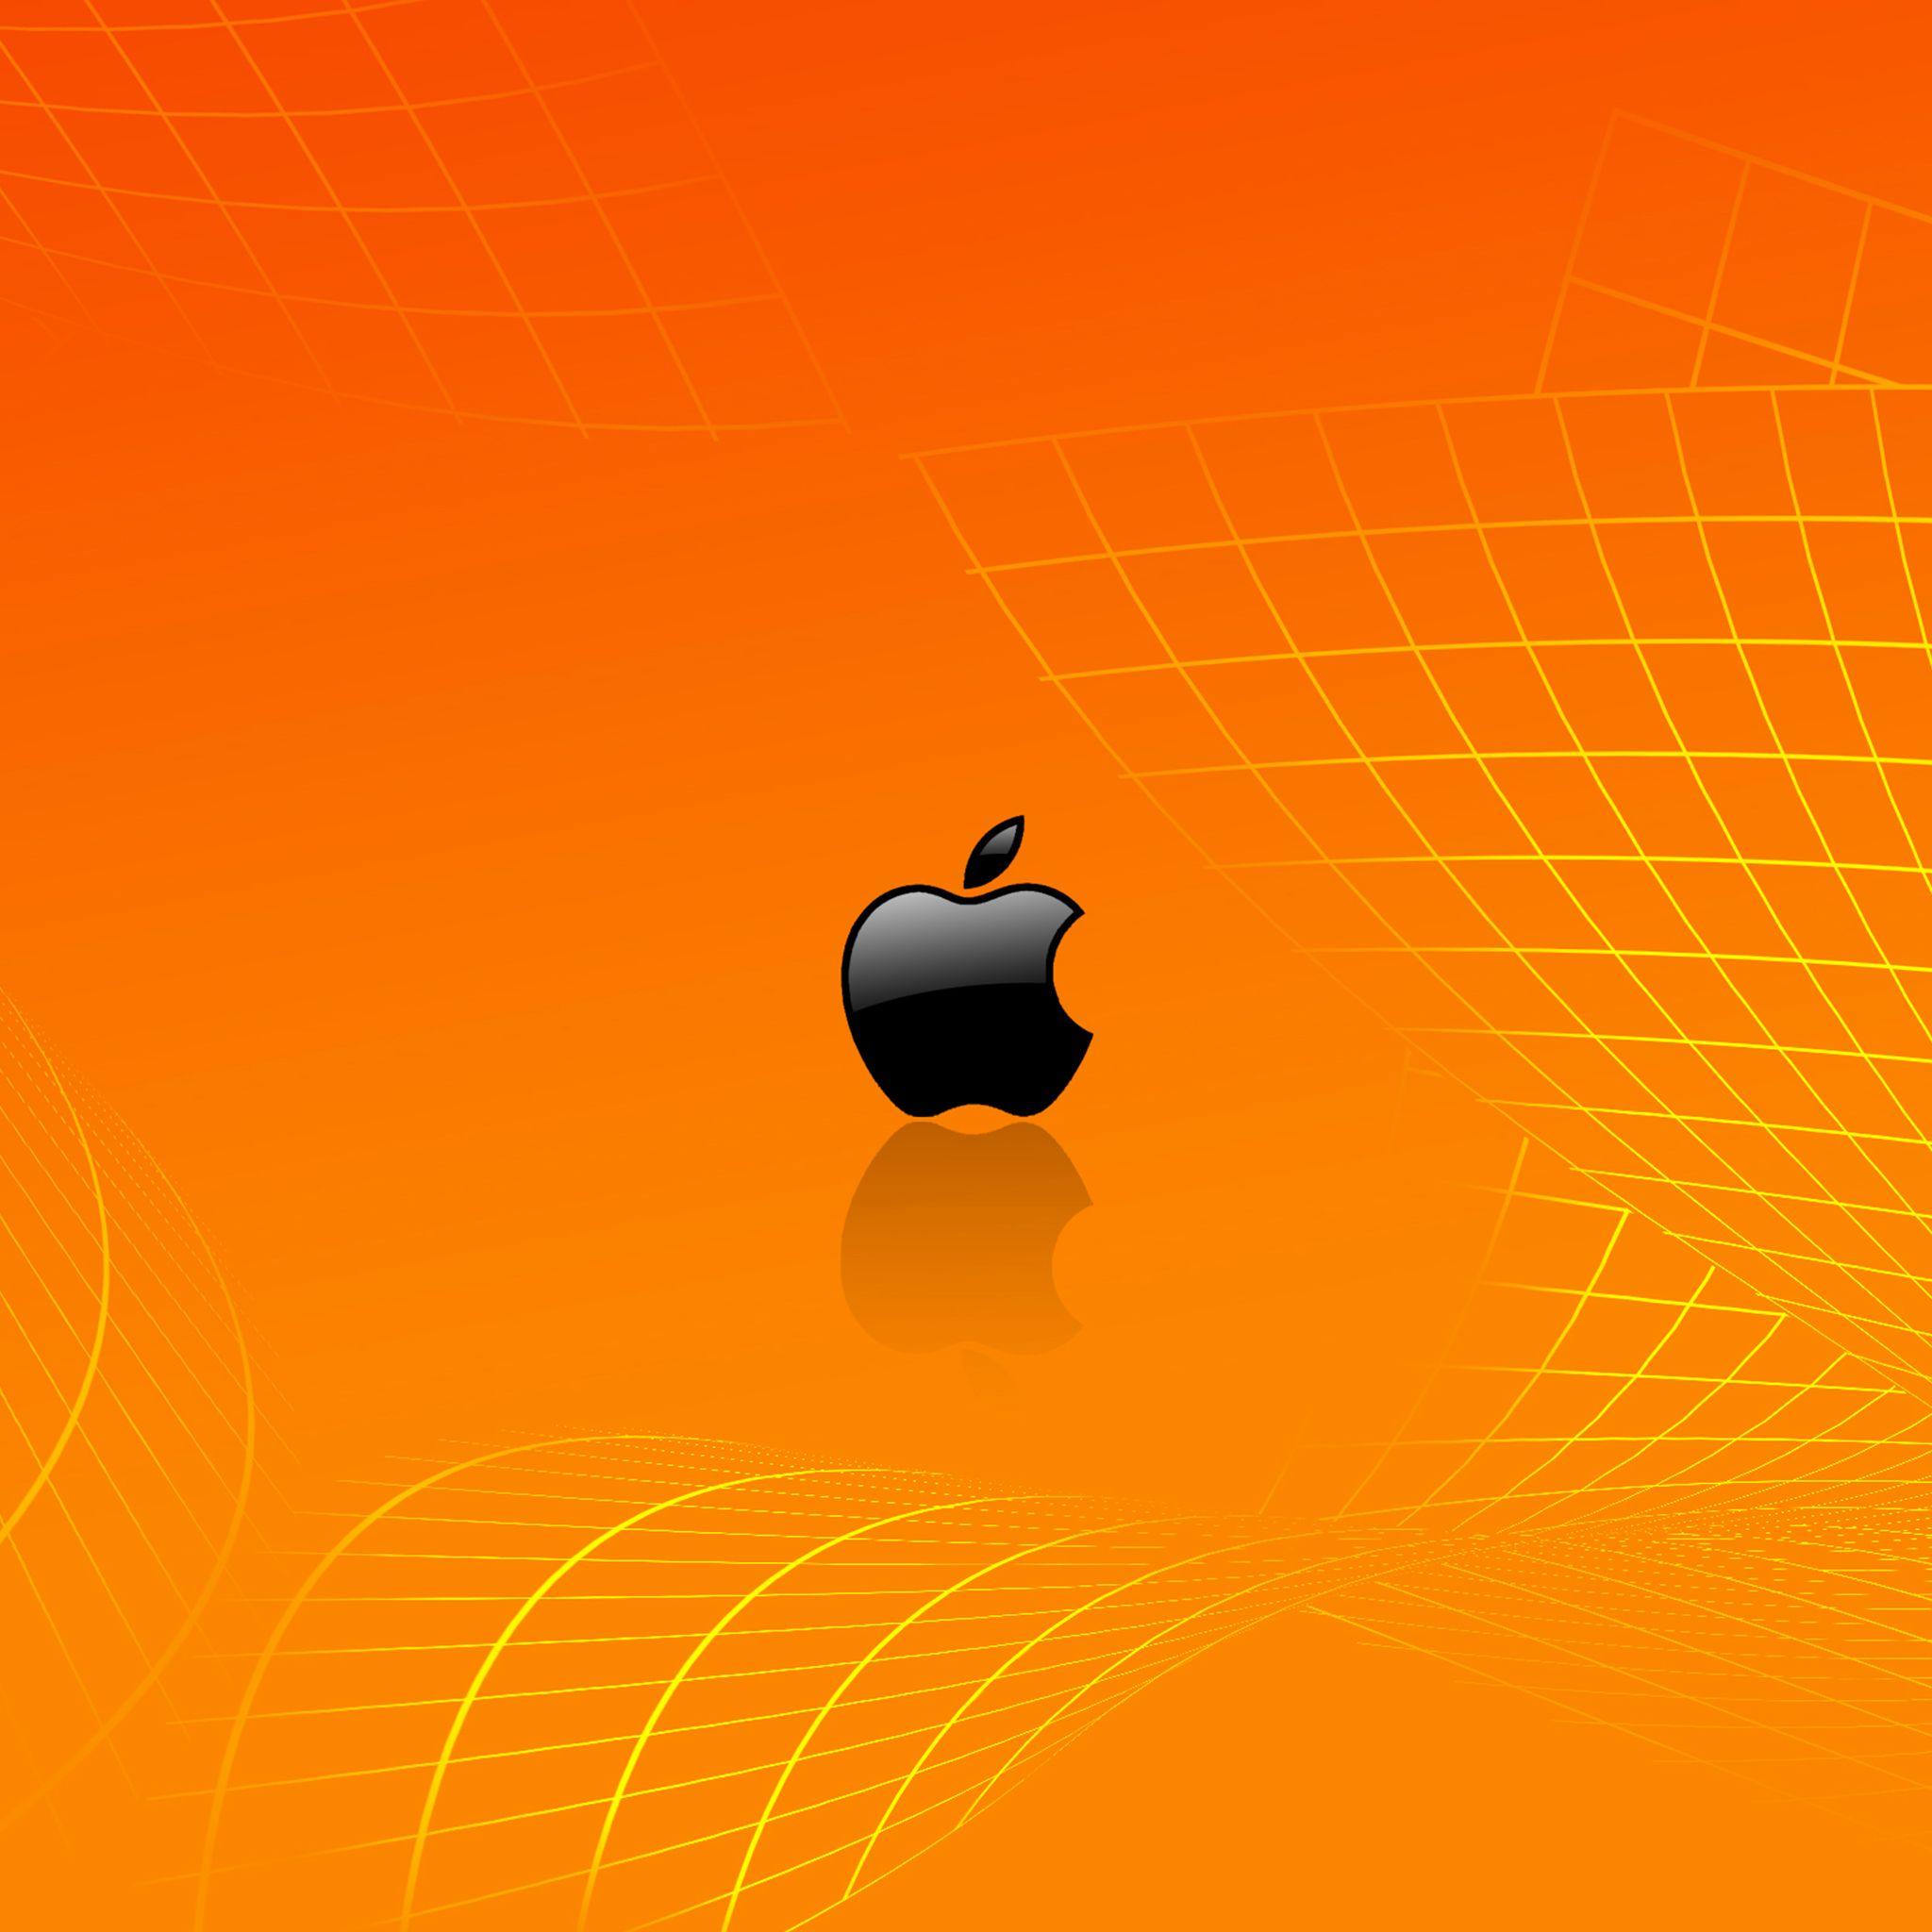 Orange Apple Wallpapers - Top Free Orange Apple Backgrounds ...